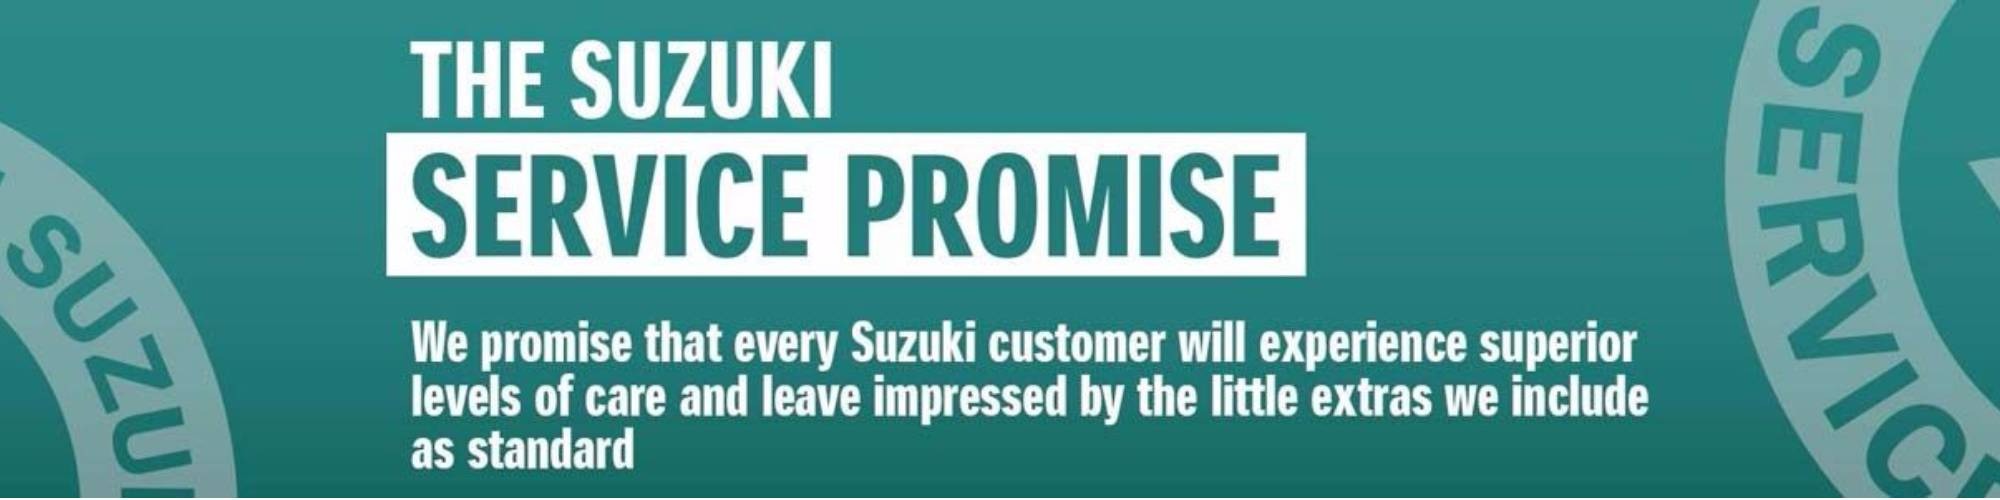 THE SUZUKI SERVICE PROMISE AT COUNTY GARAGE